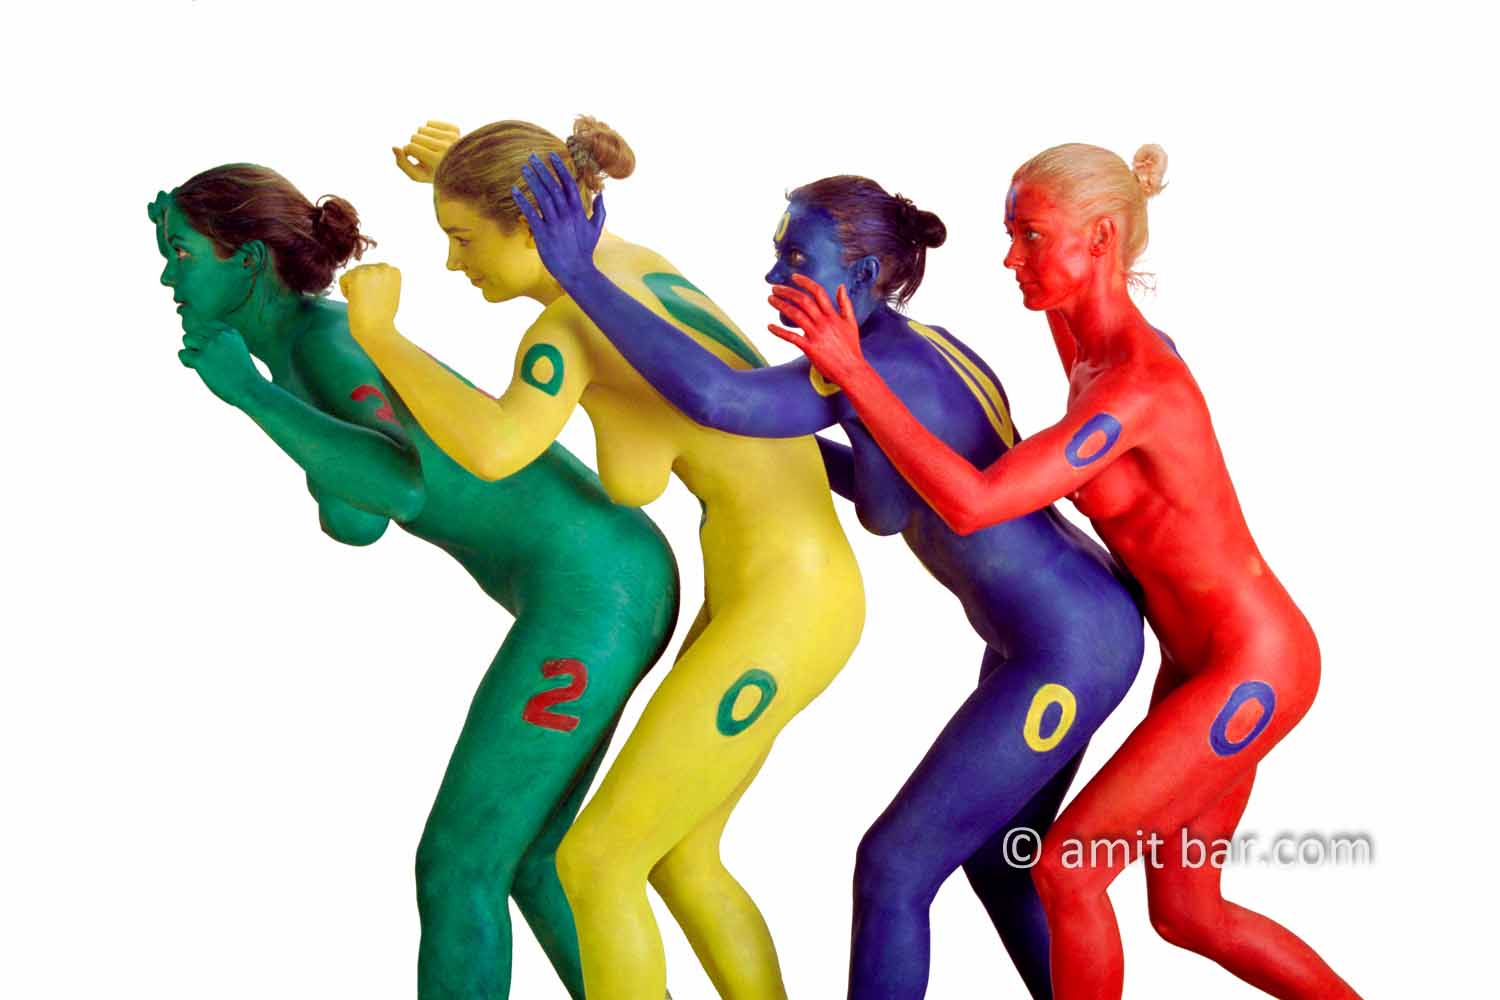 Millenium girls II: Four body painted girls are celebrating the mlilenium